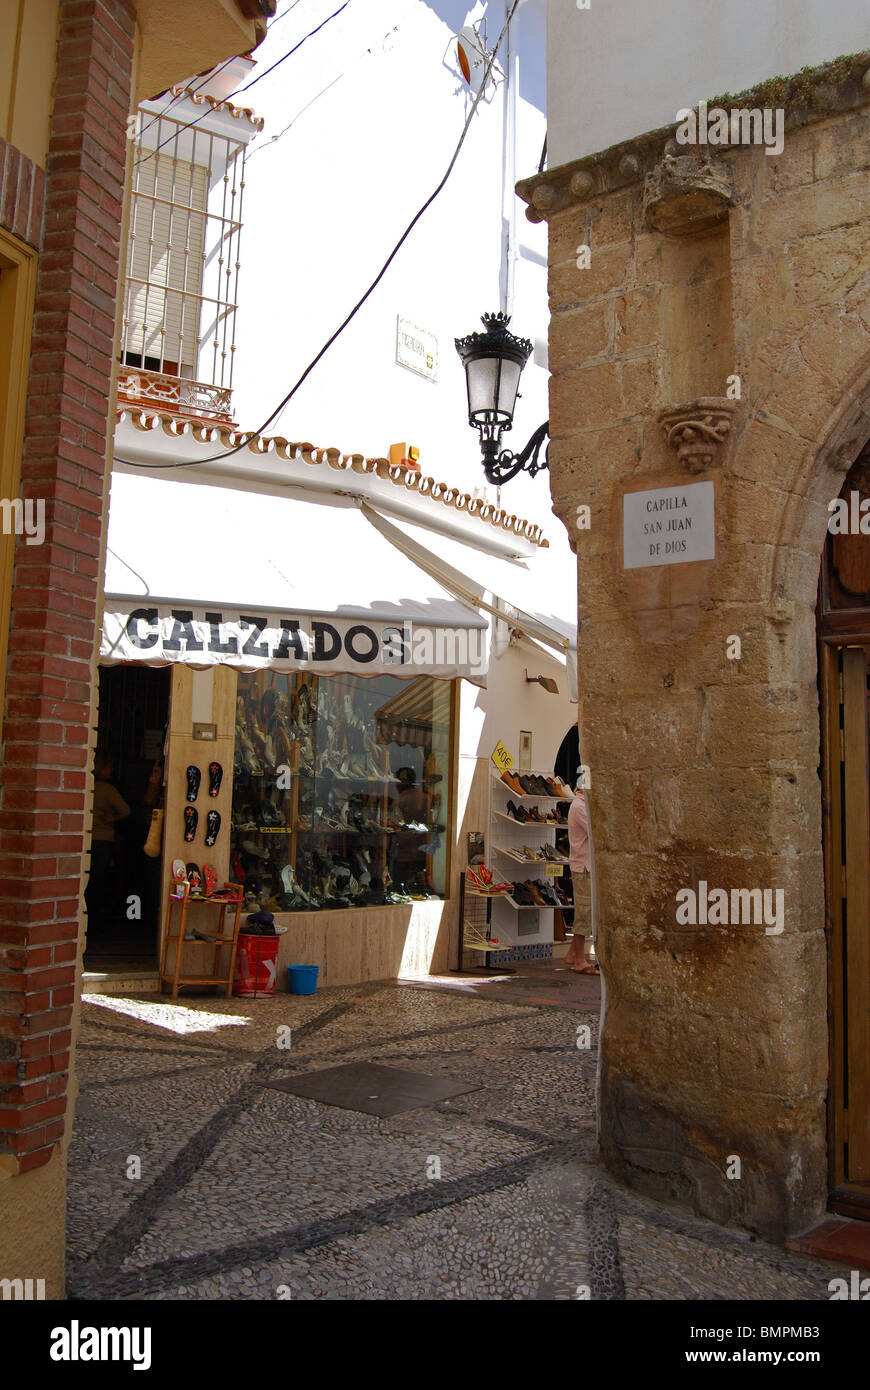 Rue de la vieille ville vue de Capilla San Juan de Dios (chapelle), Marbella, Costa del Sol, la province de Malaga, Andalousie, Espagne, Europe. Banque D'Images